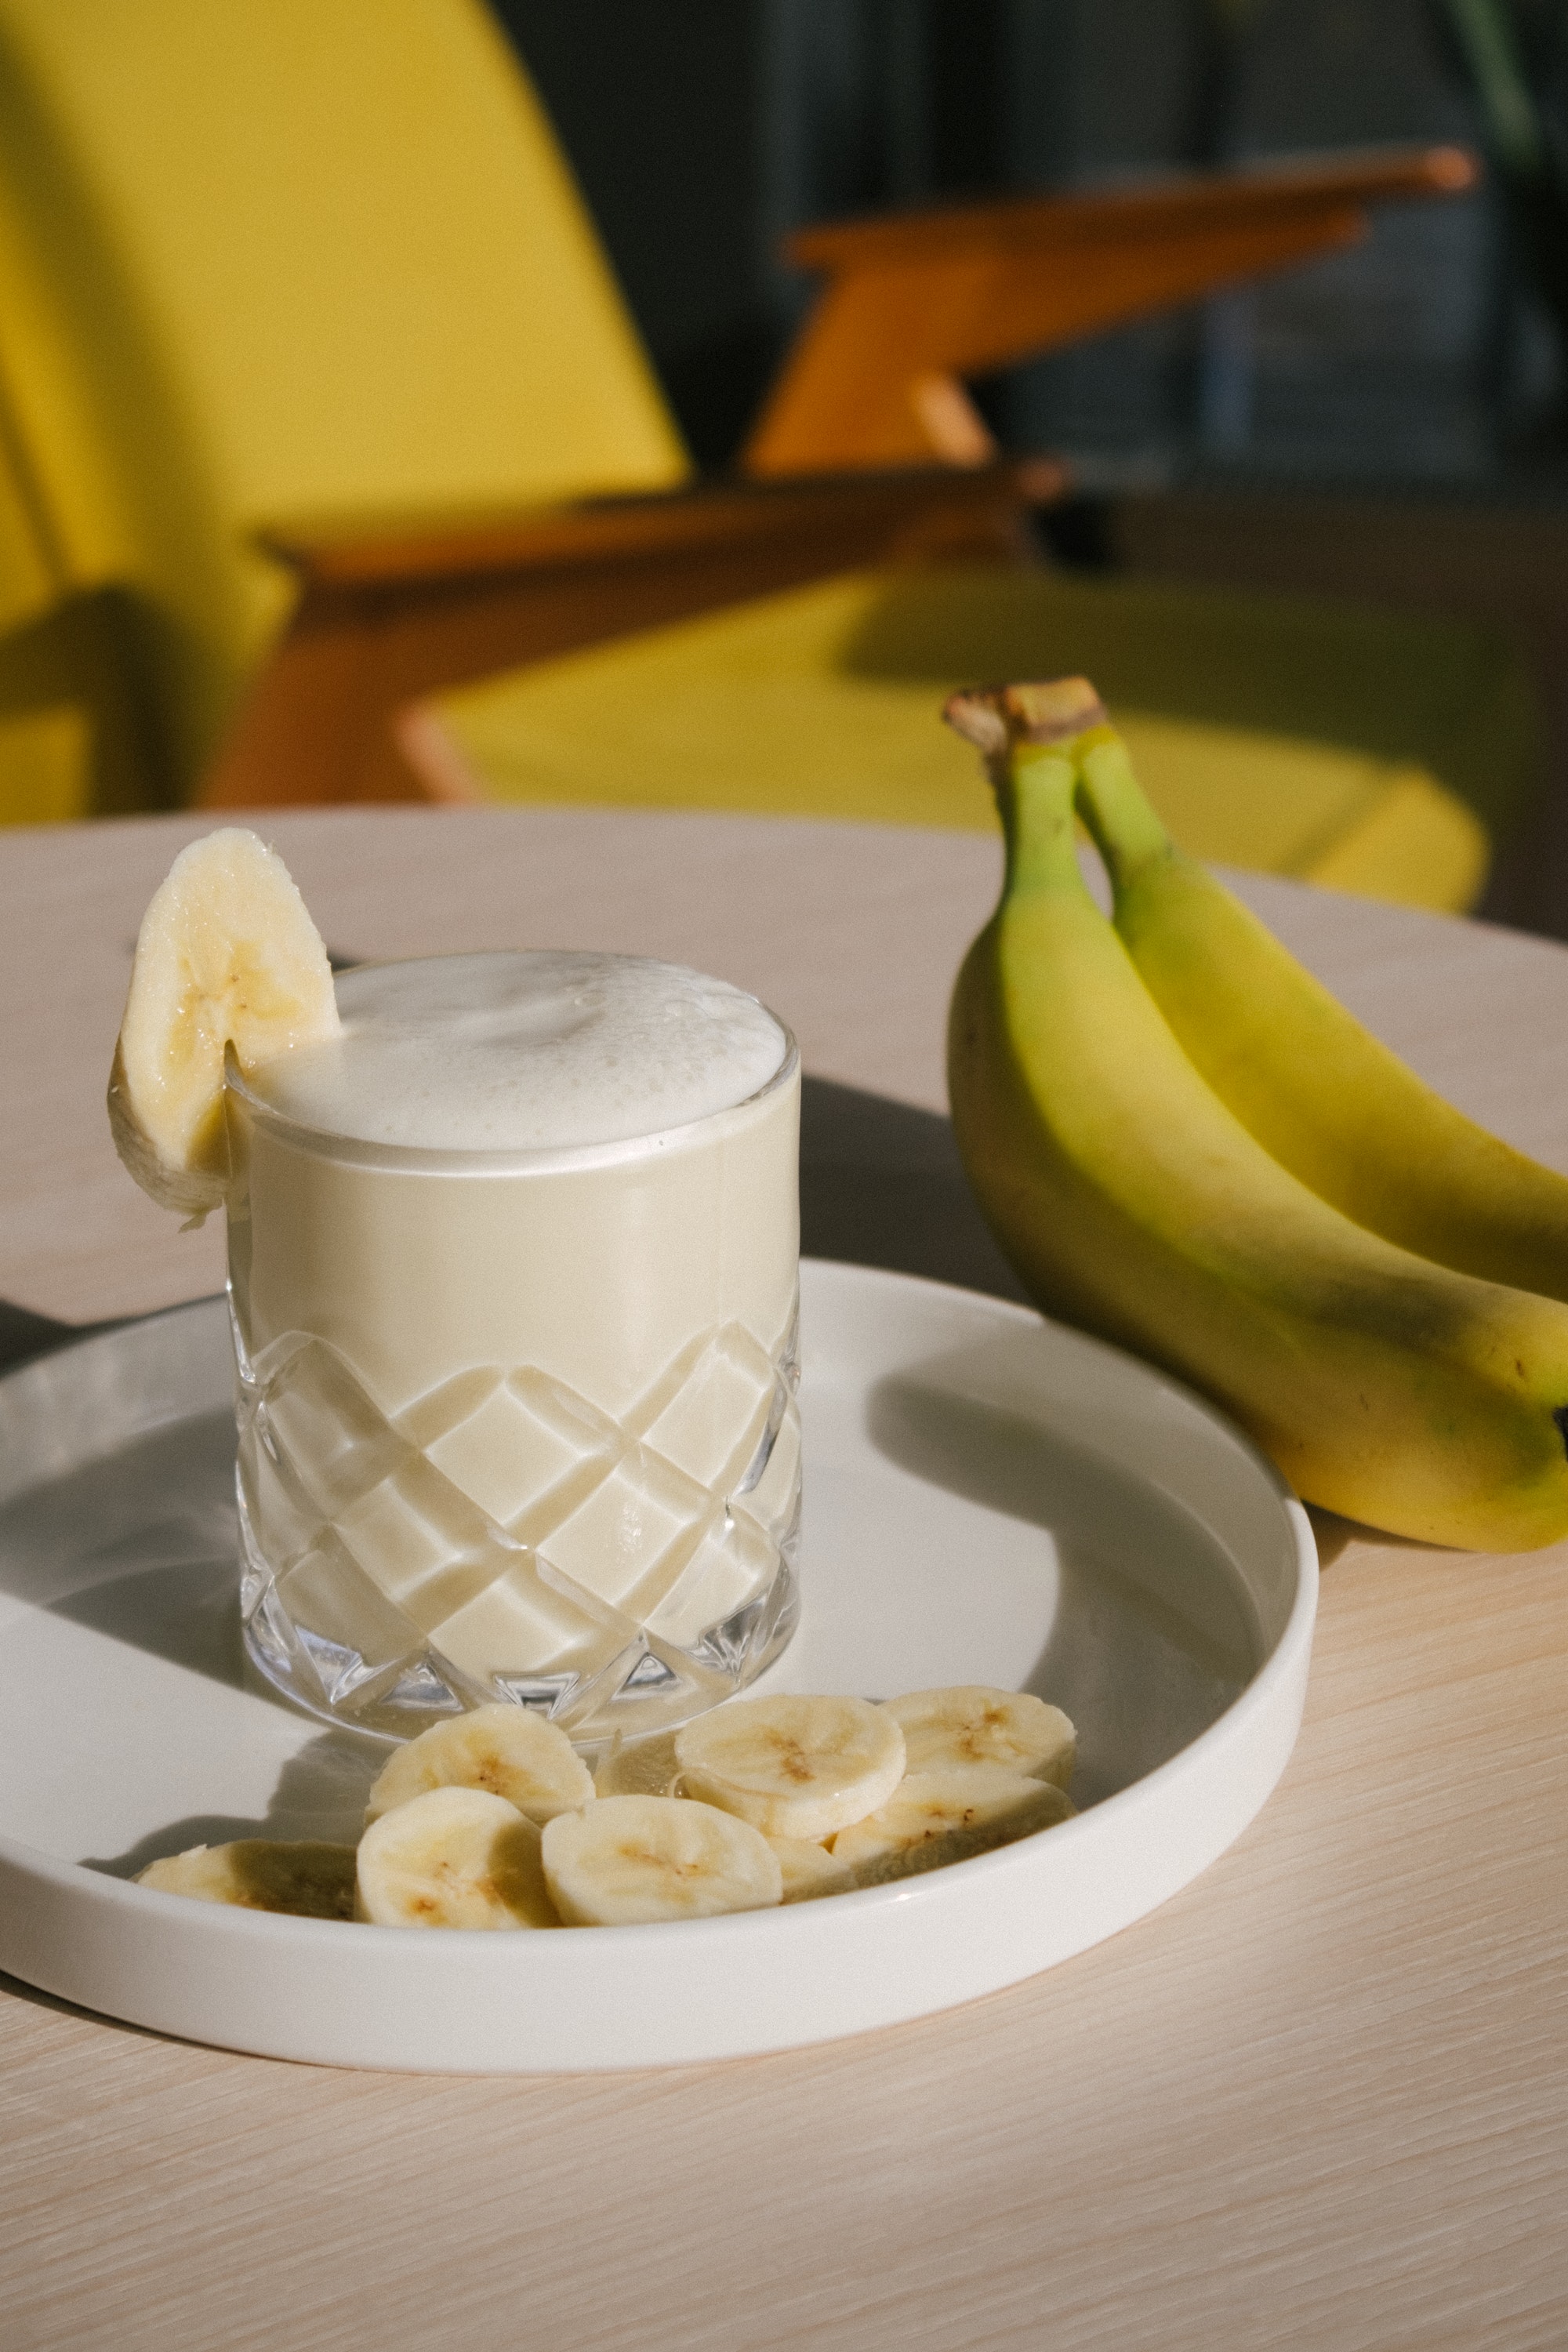 Mango Banana Smoothie Recipe